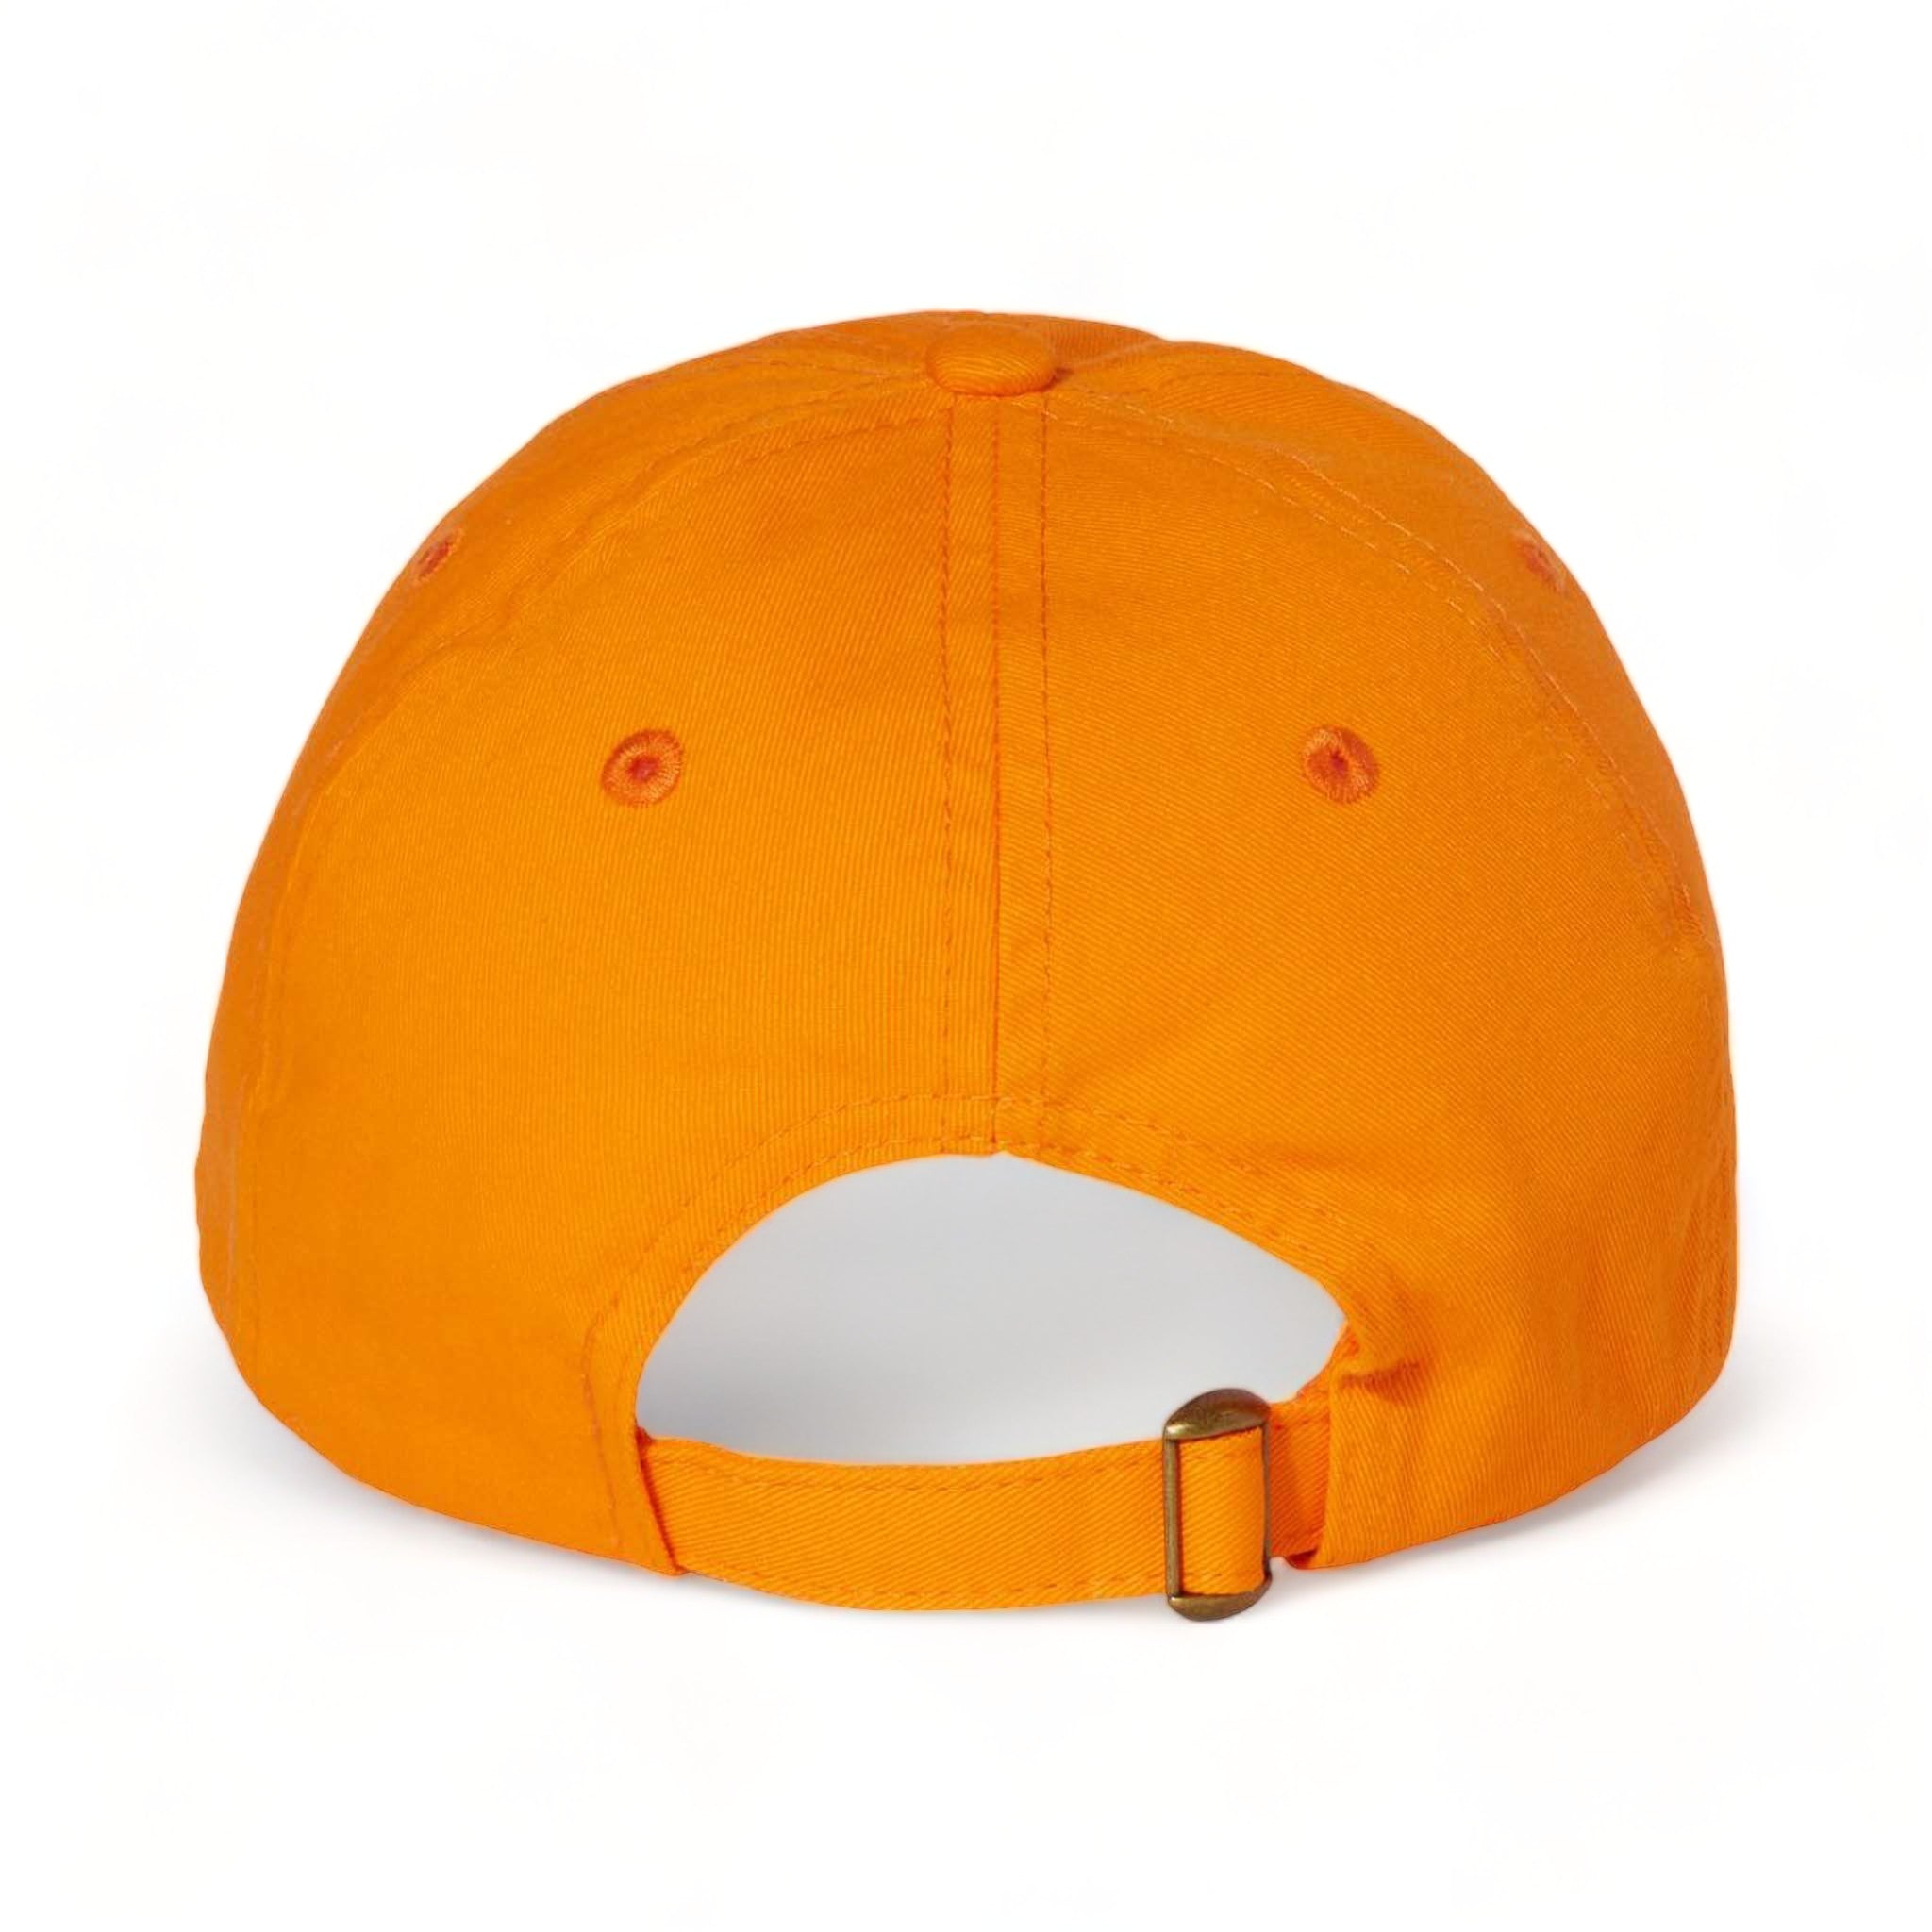 Back view of Valucap VC300A custom hat in neon orange